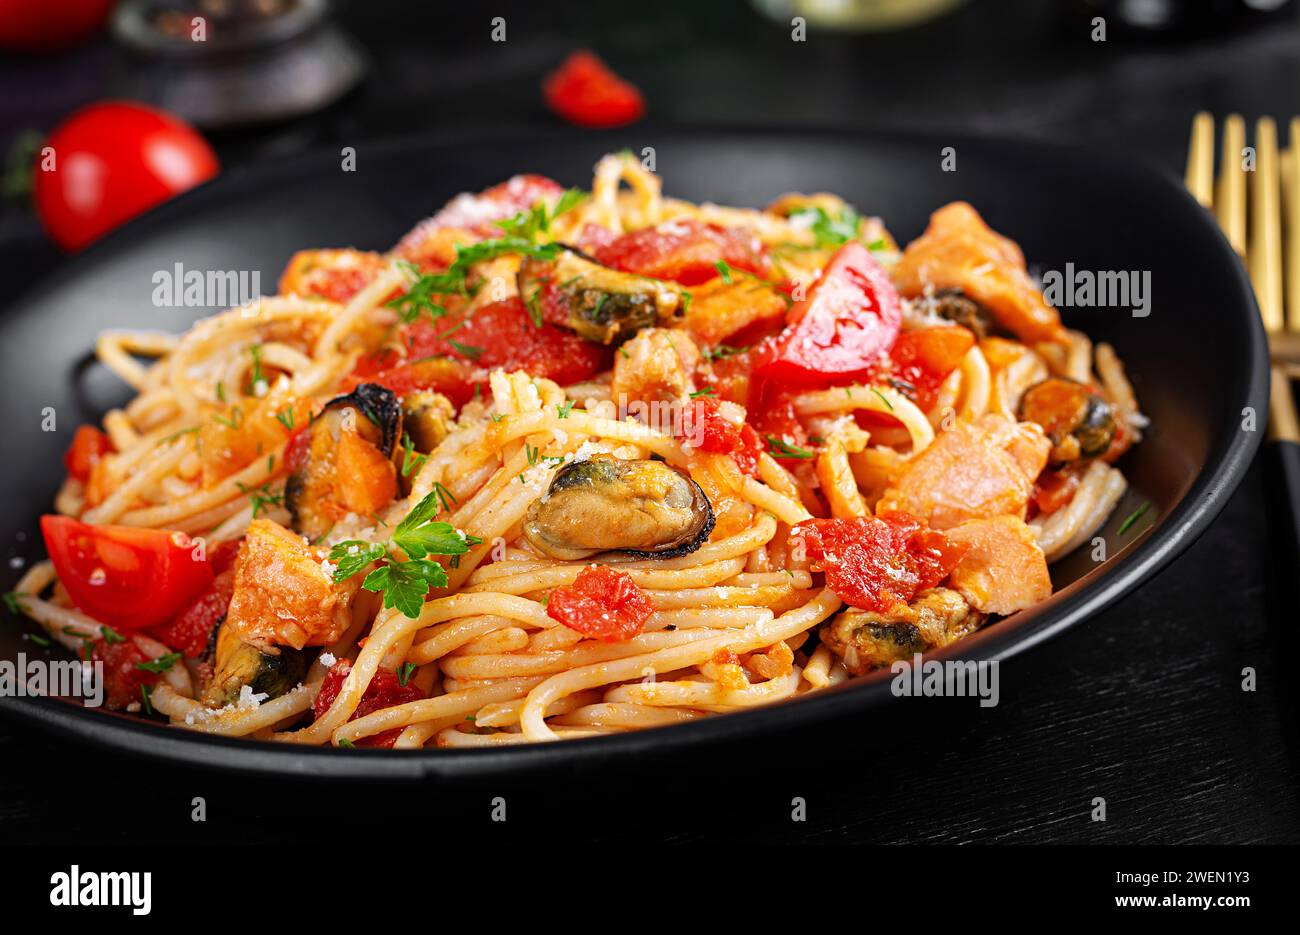 Classic italian pasta spaghetti marinara with mussels and salmon on dark table. Spaghetti pasta with sauce marinara. Stock Photo